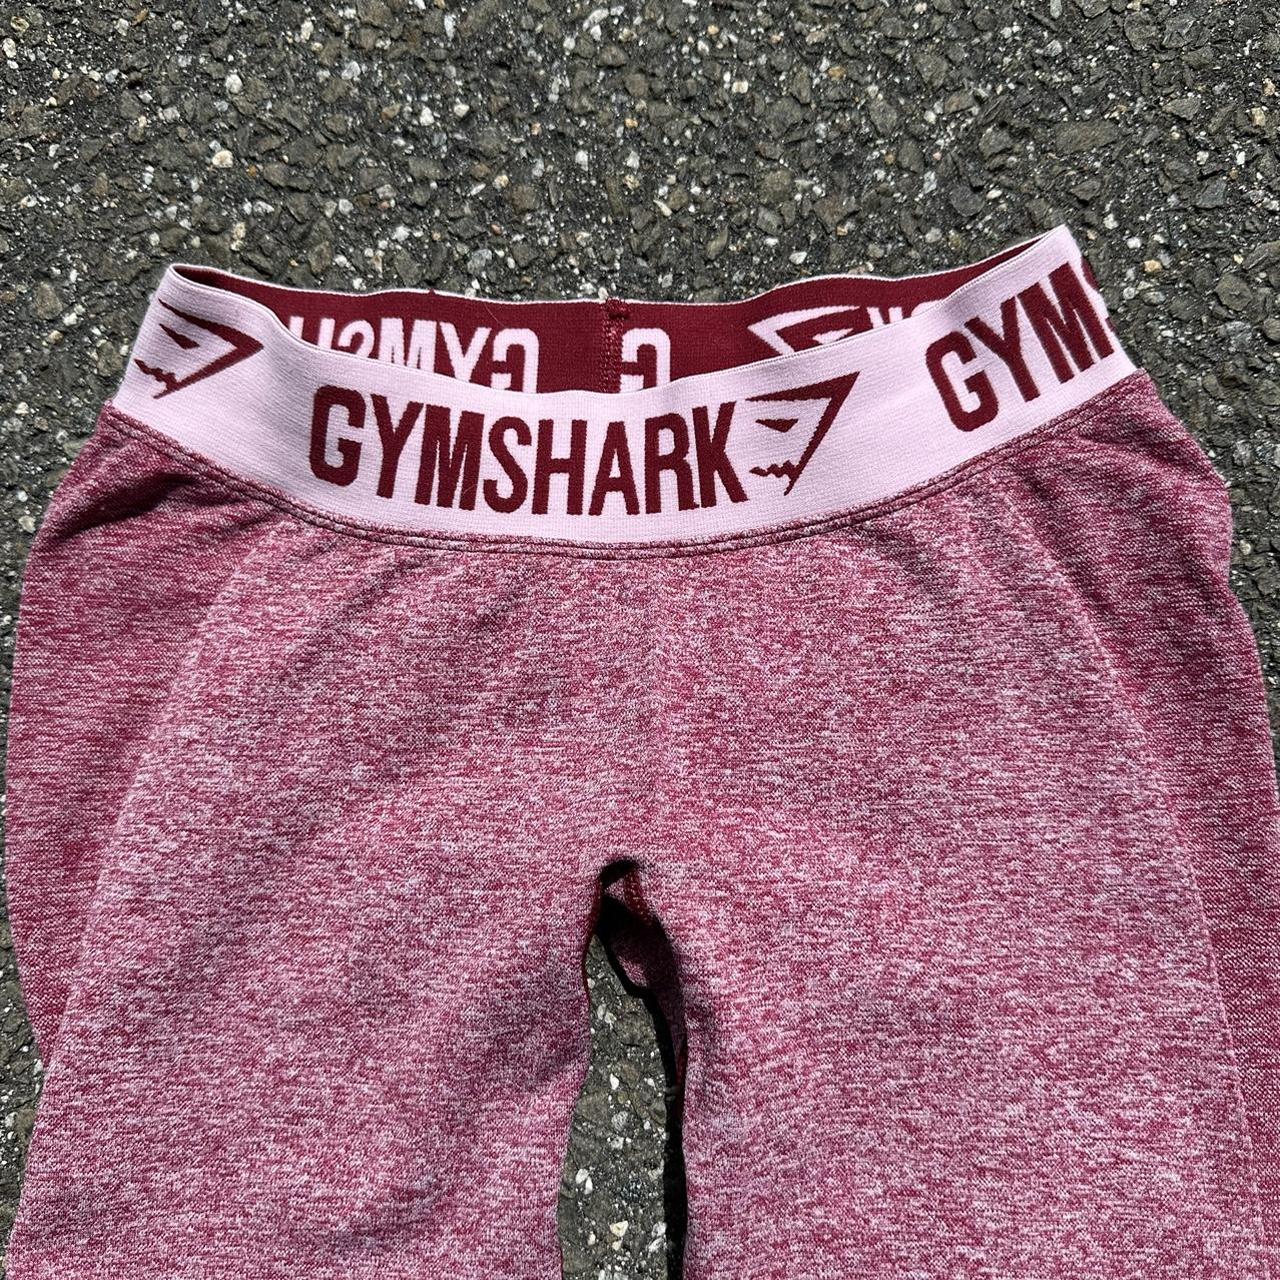 Gymshark Leggings Used - Good Size - X-Small Retail - Depop